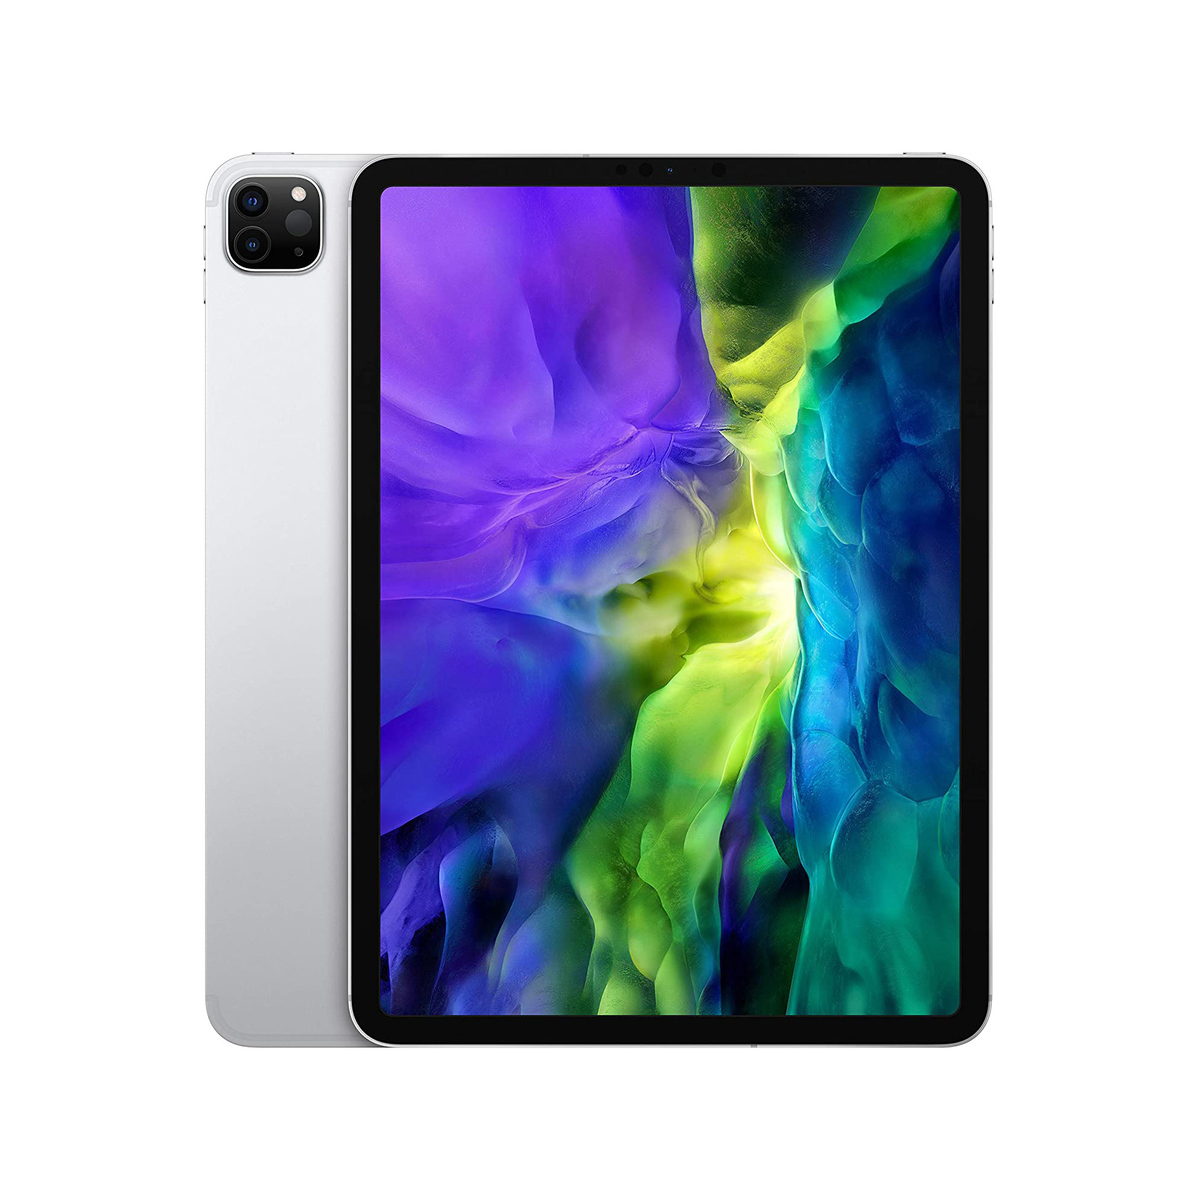 Apple iPad Pro (11-inch, Wi-Fi + Cellular, 256GB) - Silver (2nd Generation)